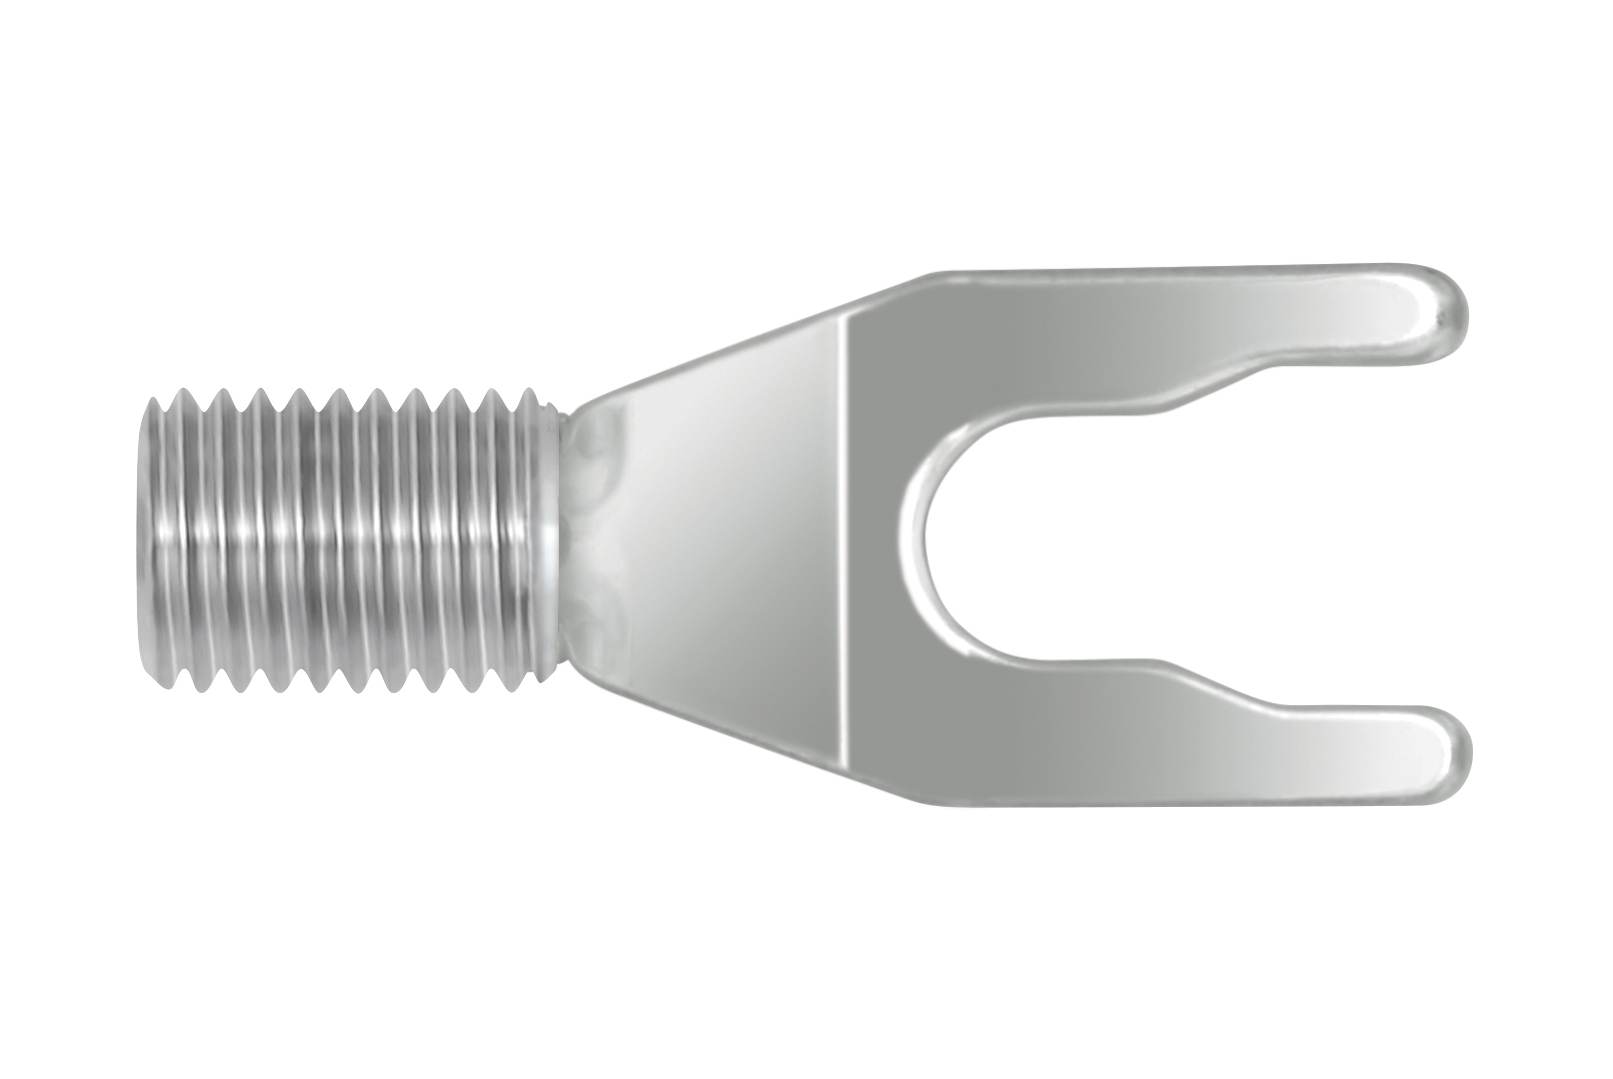 Разъёмы для акустического кабеля Wire World 16 silver spade for exchanging (SPDSEX16), 16 шт. chicken wire fence galvanised steel 10x0 5 m silver